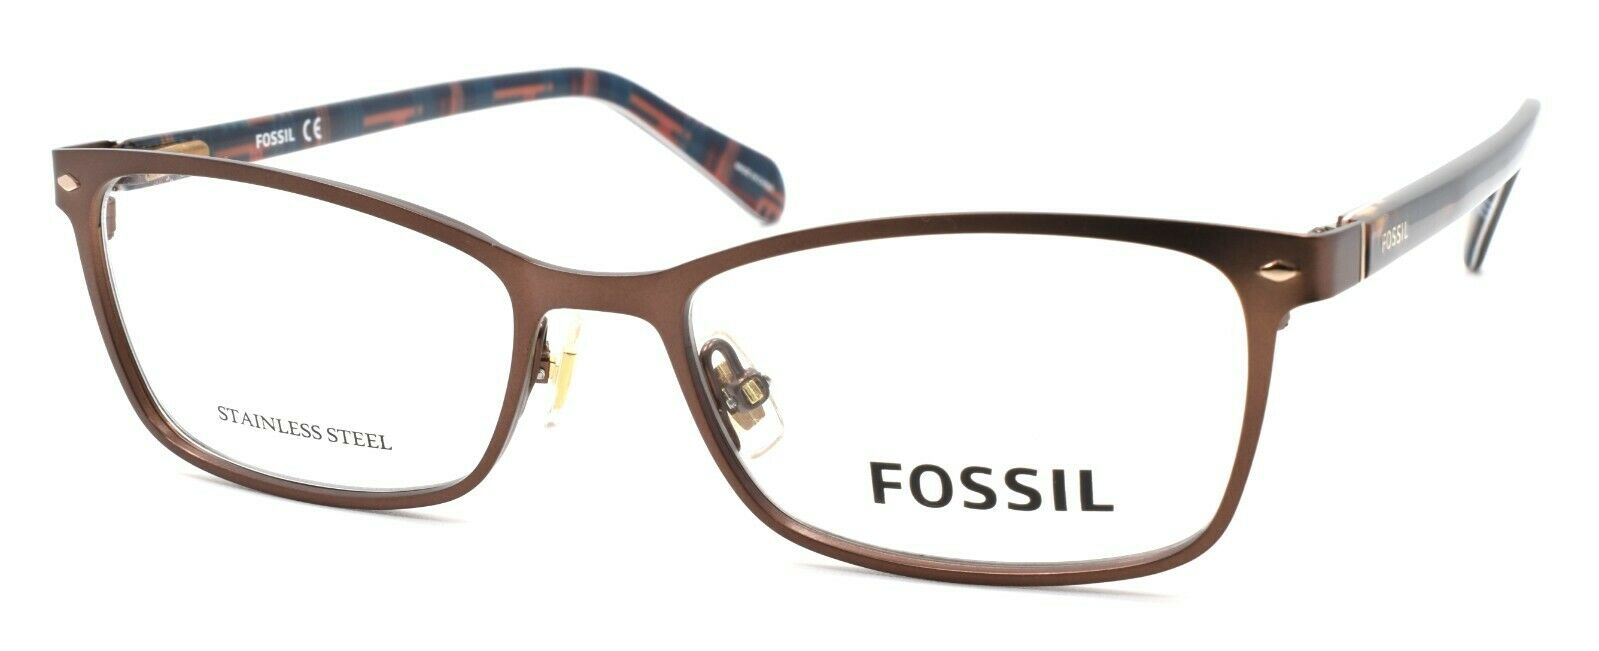 1-Fossil FOS 7038 4IN Women's Eyeglasses Frames 50-16-140 Matte Brown + CASE-716736080918-IKSpecs